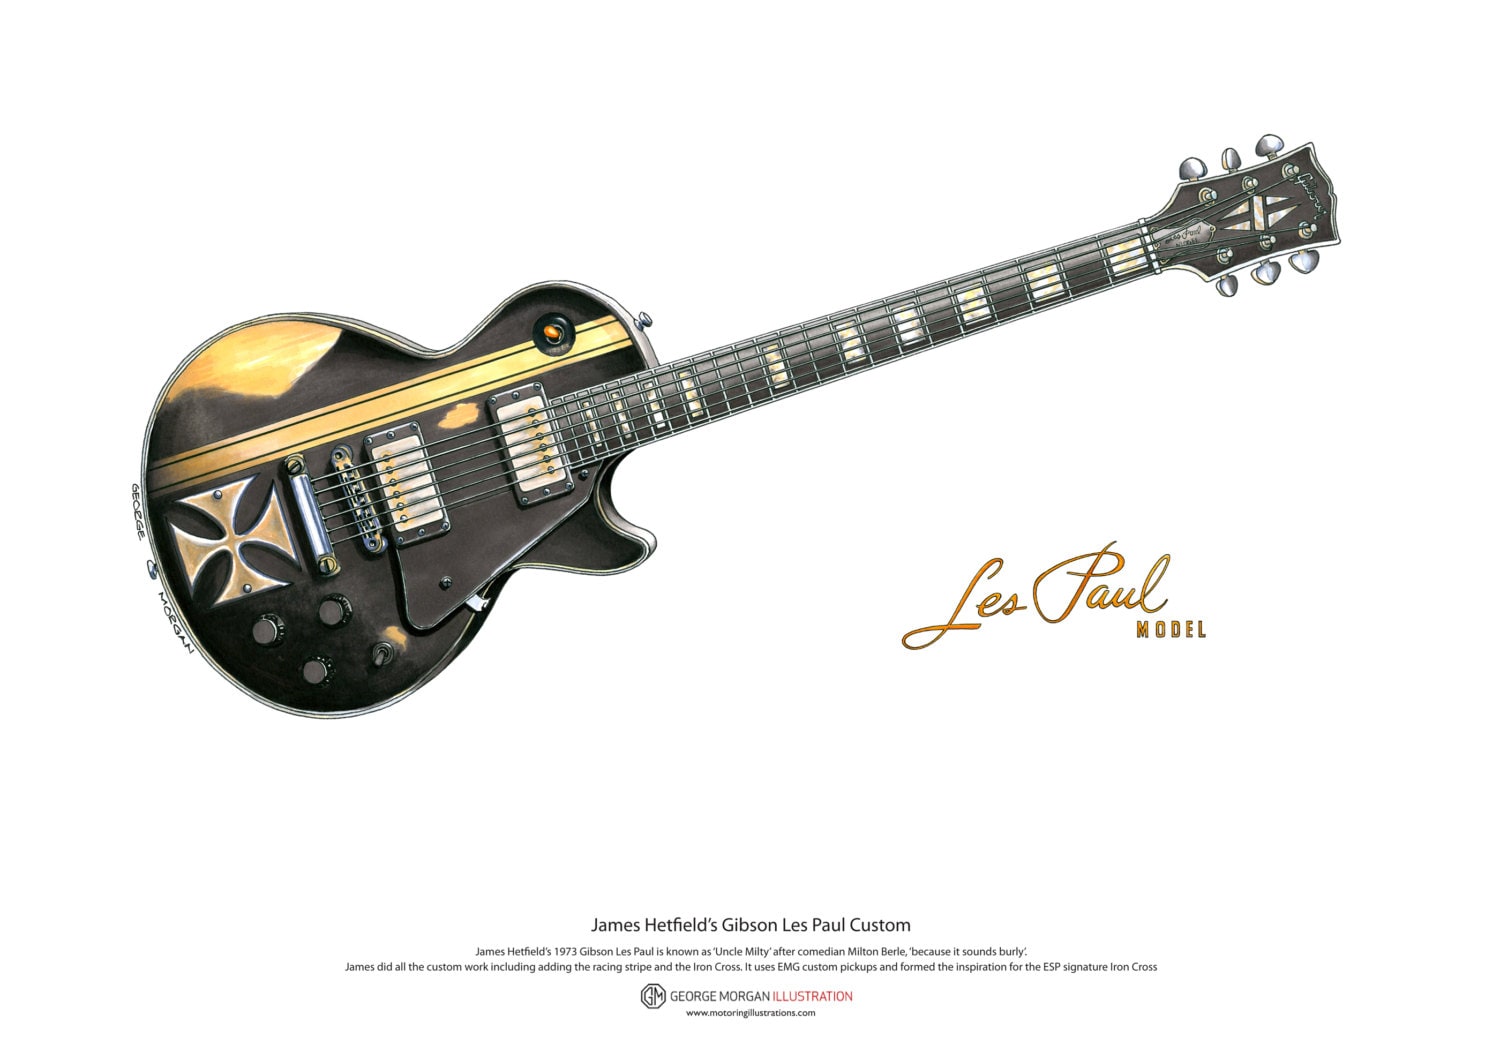 gidsel Peck rør James Hetfield's Gibson Les Paul Iron Cross ART POSTER A3 - Etsy